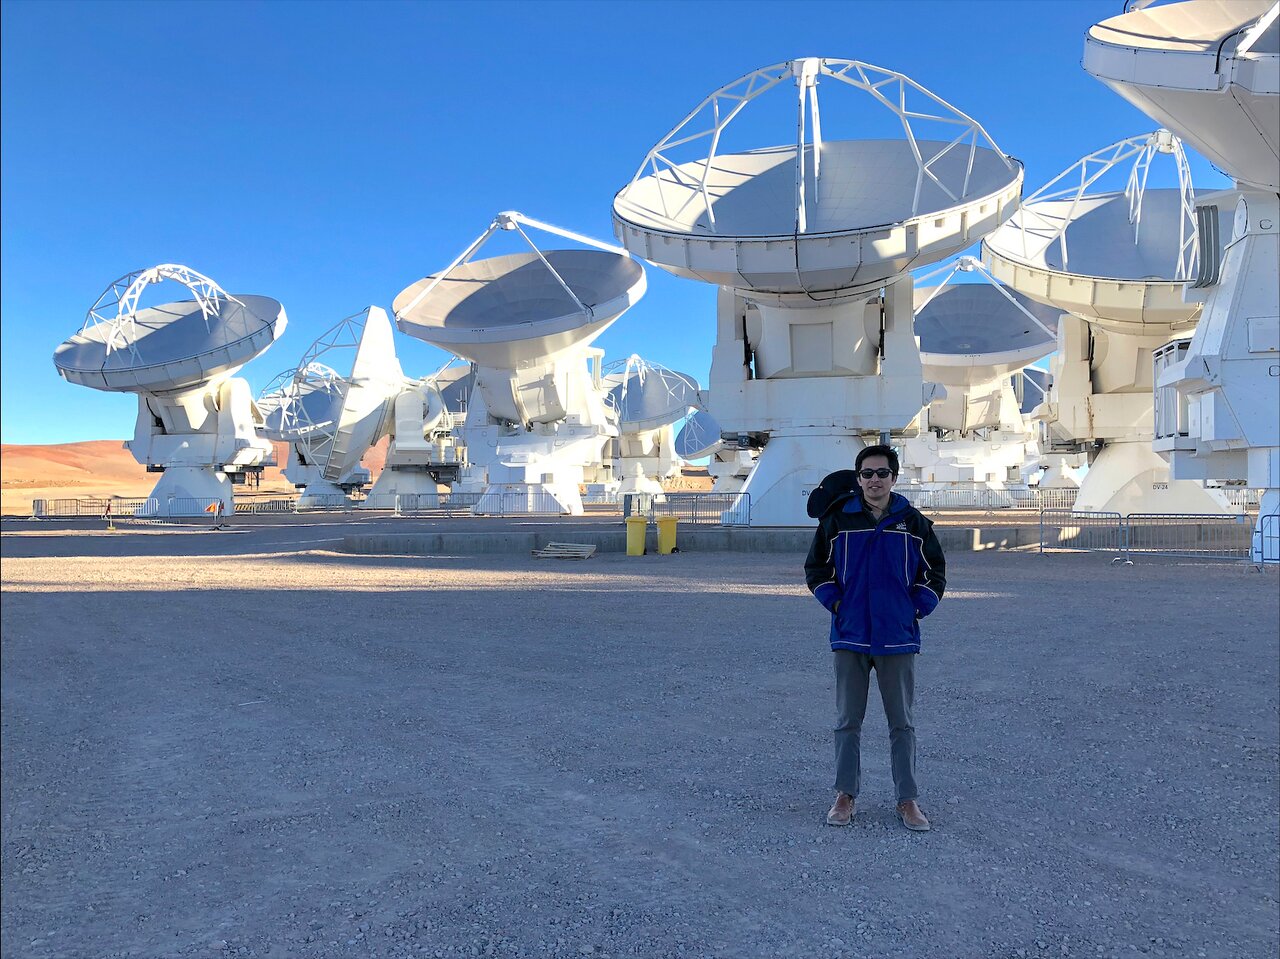 Daniel Tafoya next to the ALMA antennas in the Atacama Desert